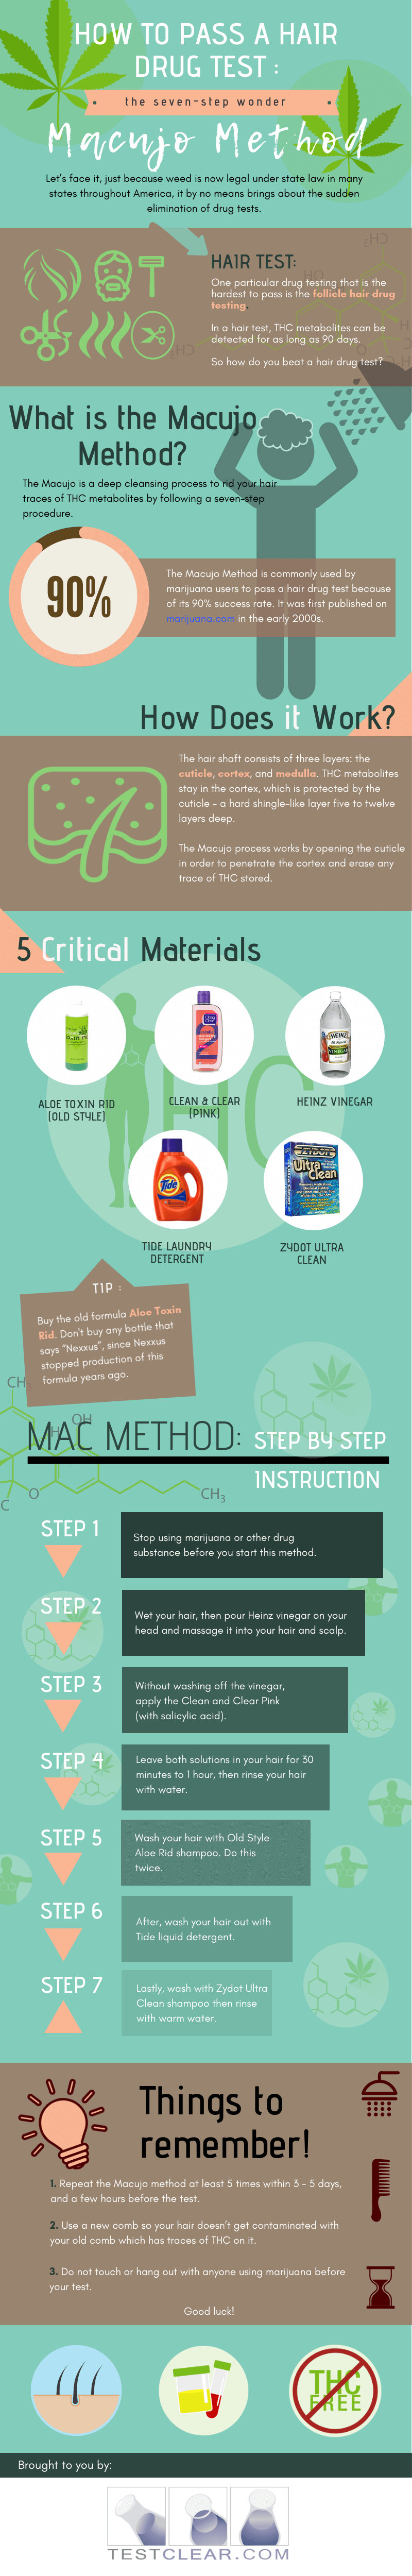 How to Pass Hair Drug Testing Using the Macujo Method